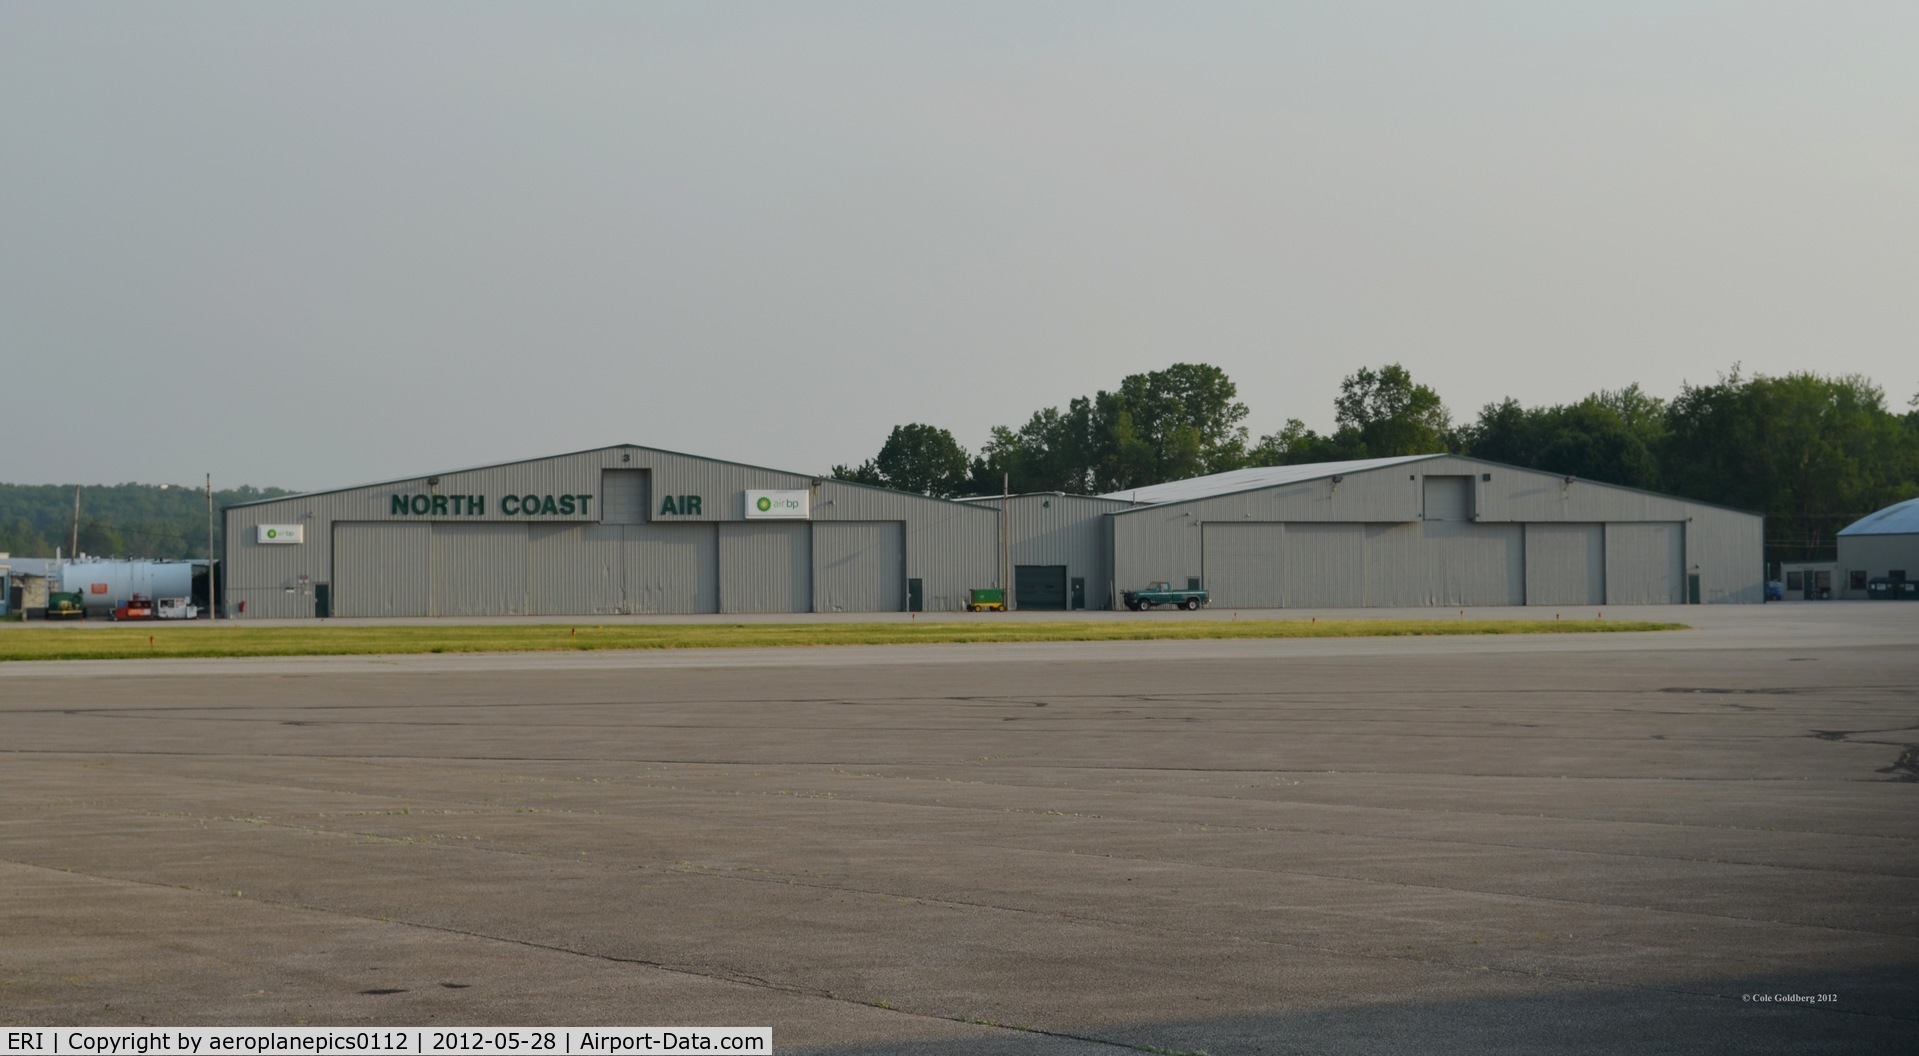 Erie Intl/tom Ridge Field Airport (ERI) - North Coast Air's hangars at KERI. 